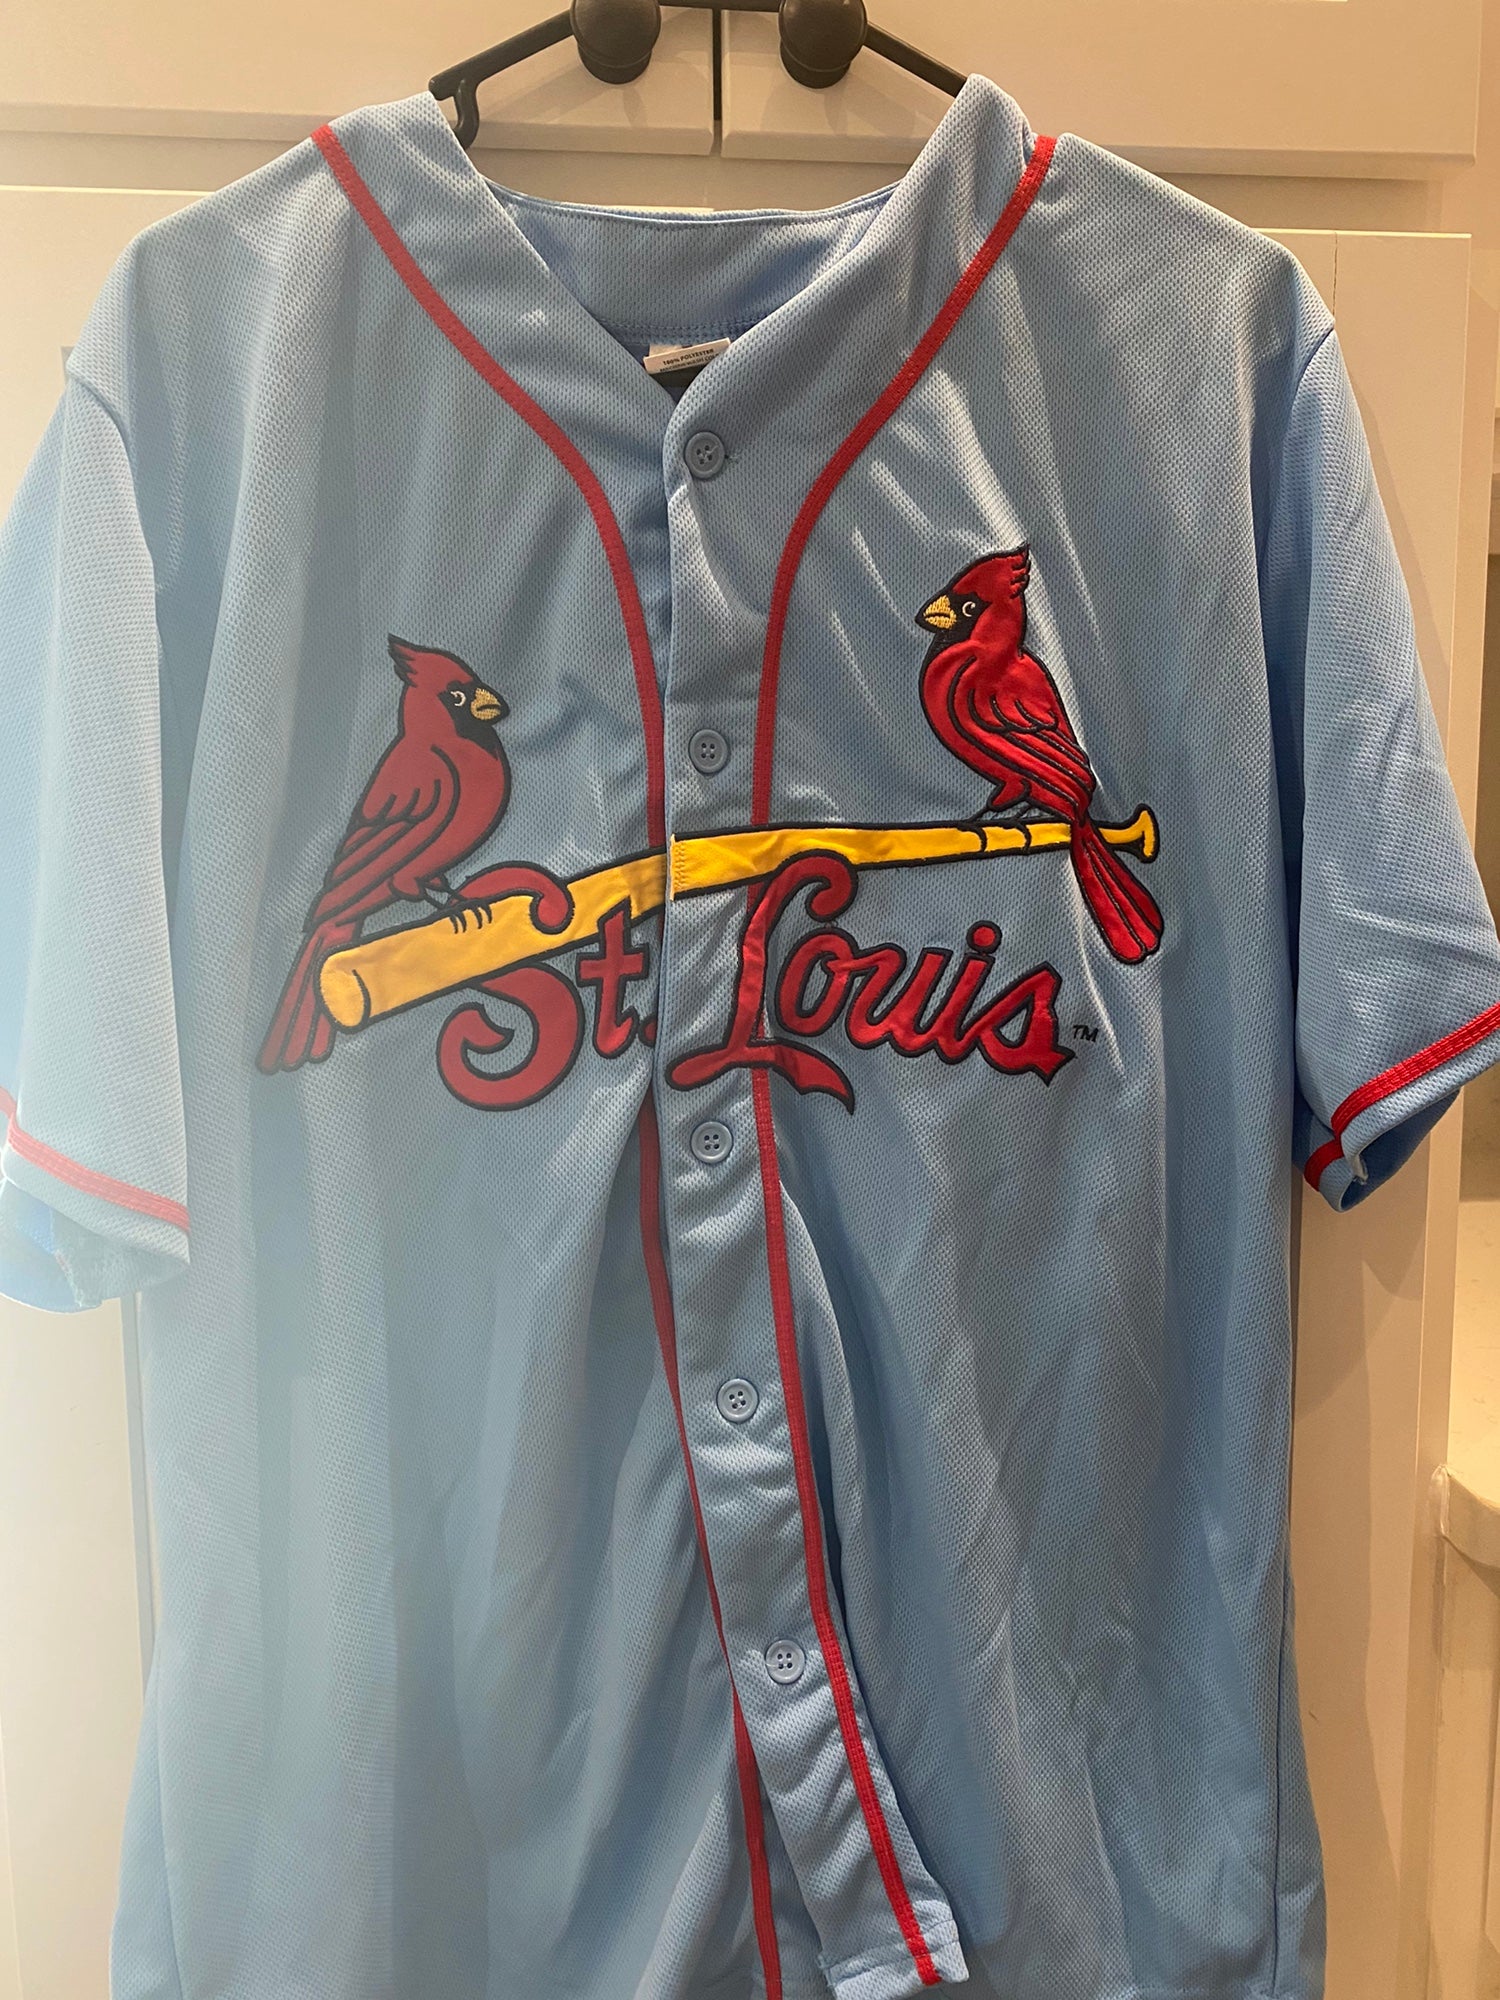 stl cardinals powder blue jersey